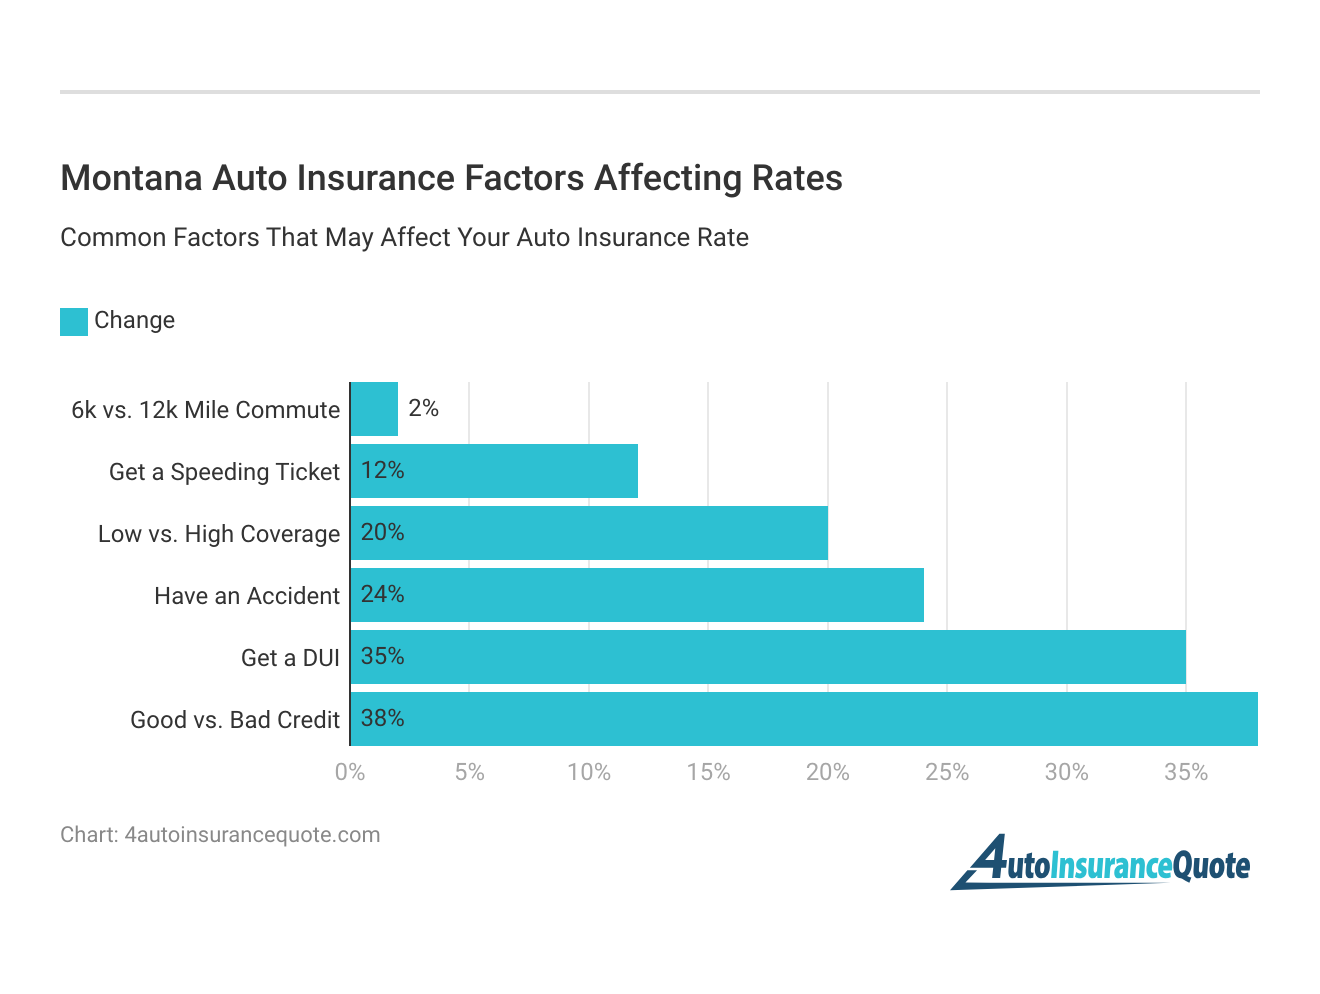 <h3>Montana Auto Insurance Factors Affecting Rates</h3>